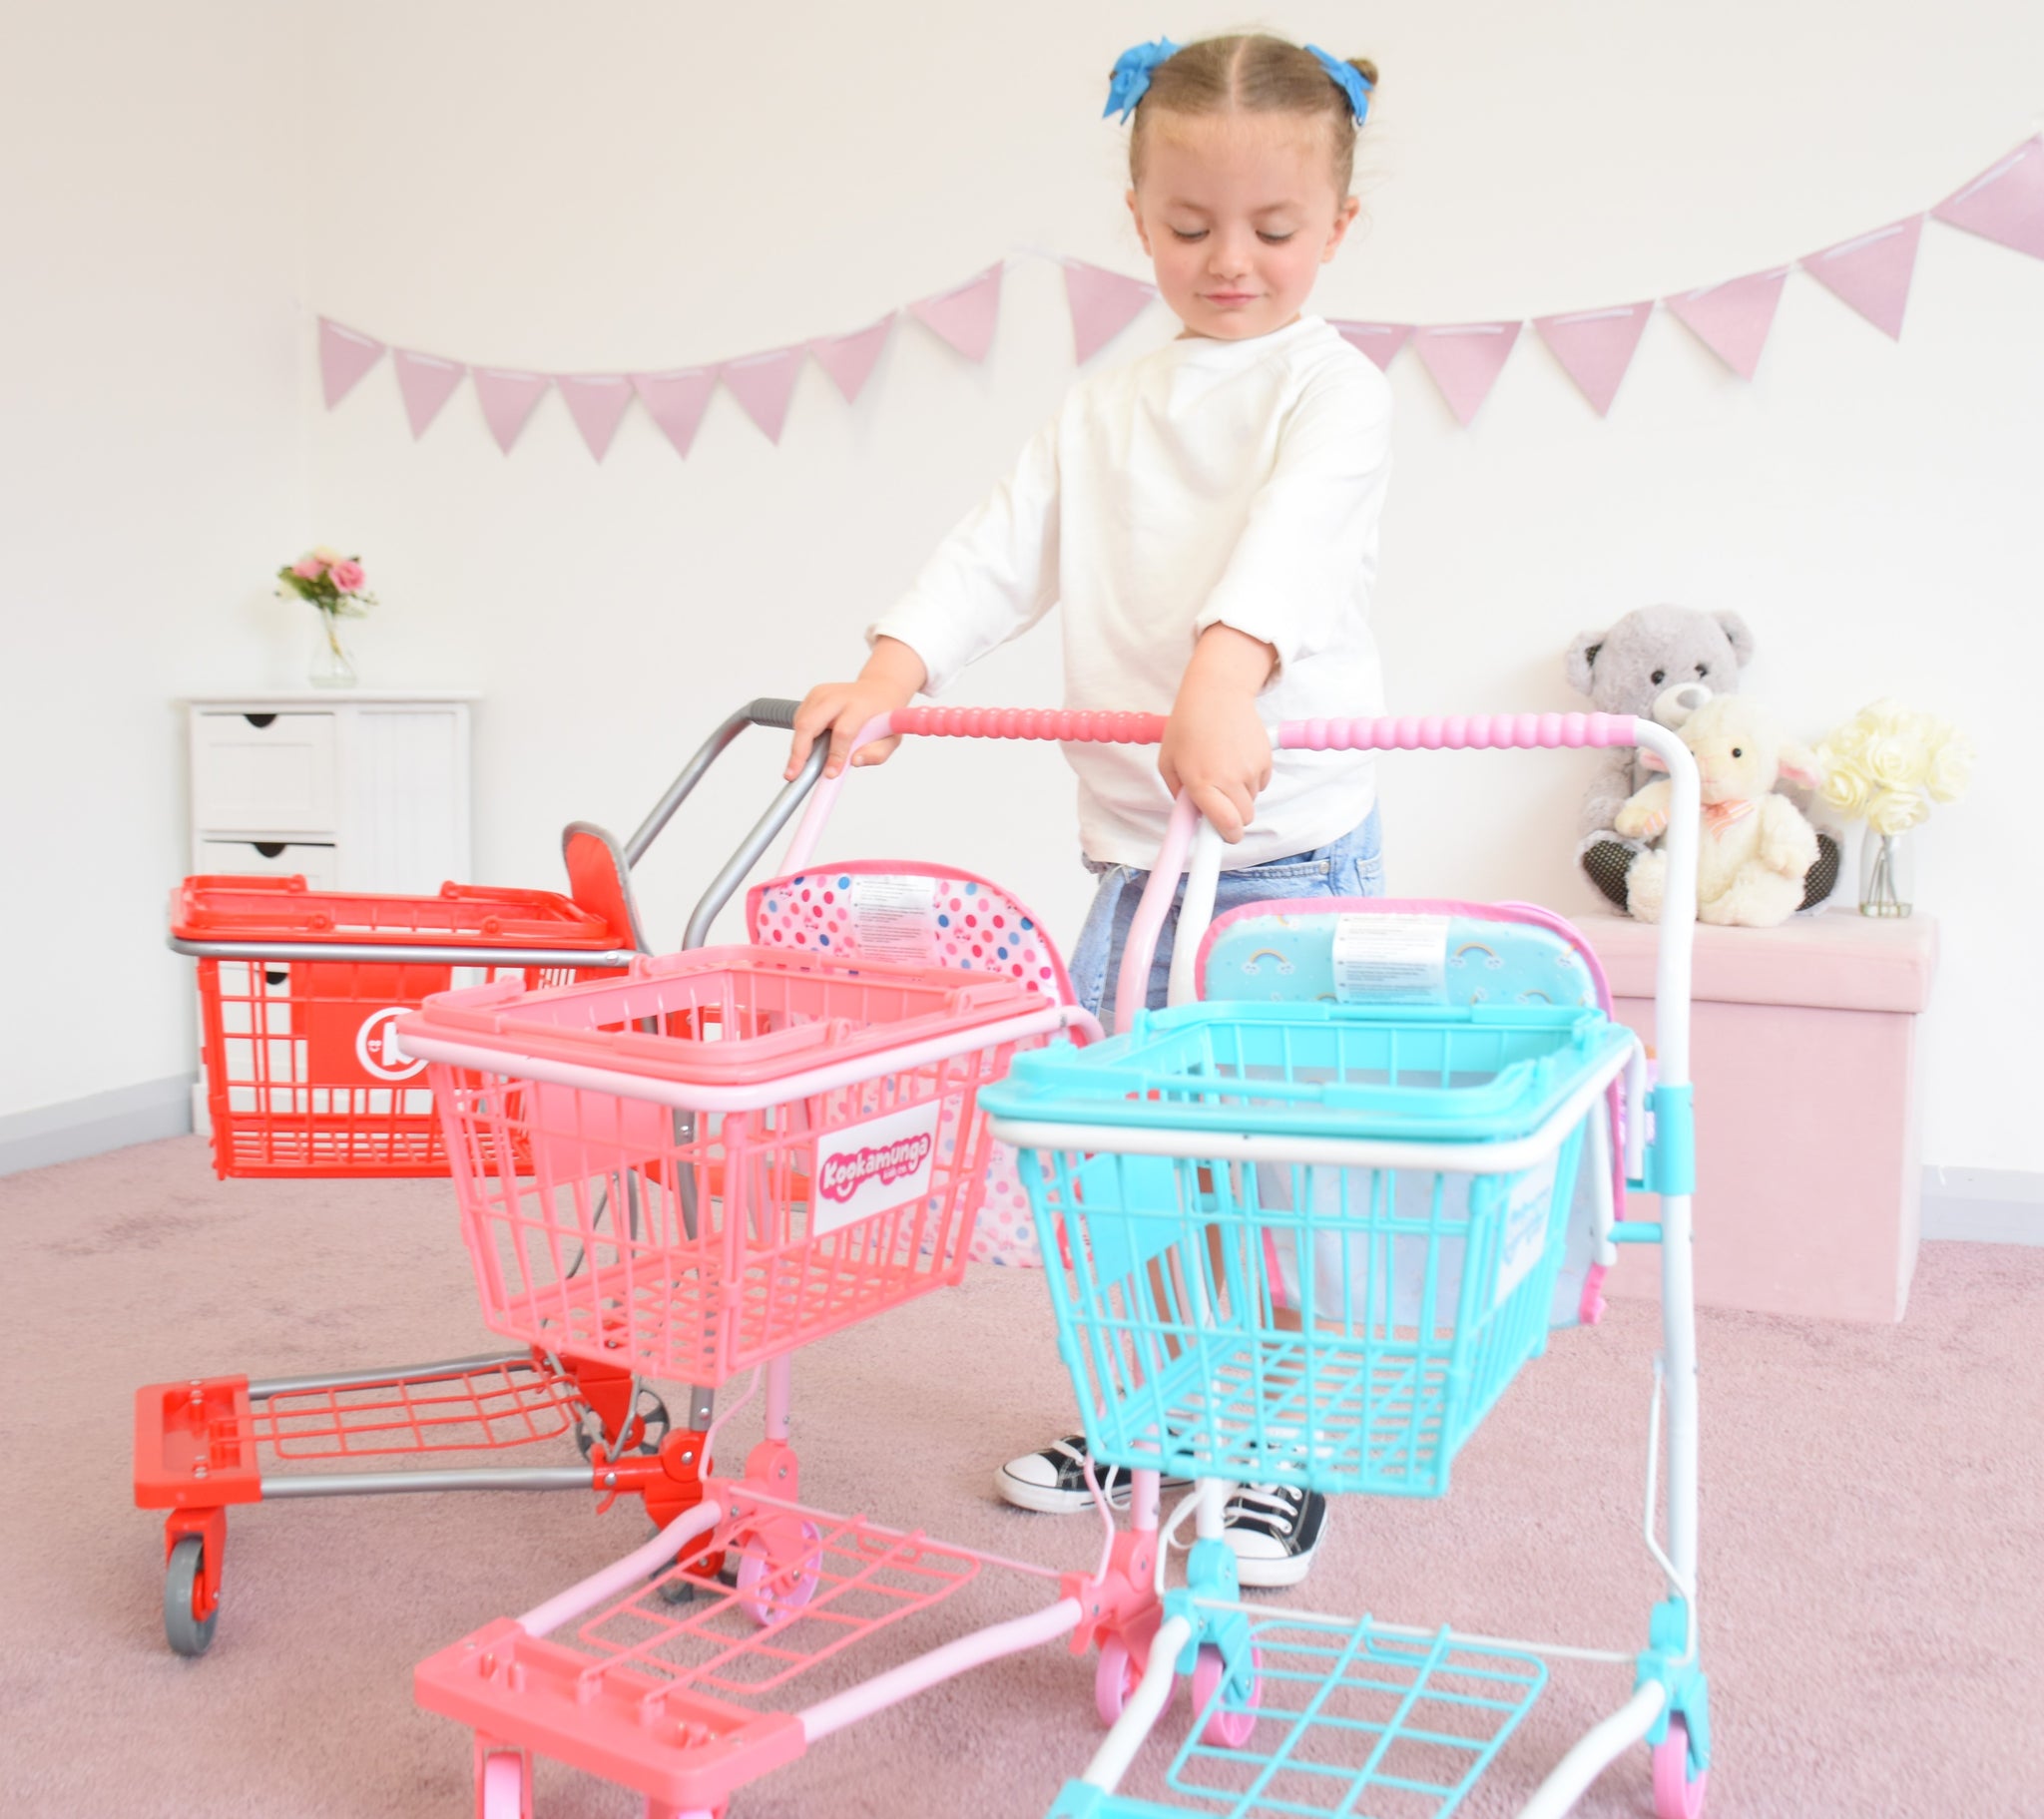 KOOKAMUNGA KIDS 2 in 1 Shopping Cart for Kids - Kids Shopping Cart - Toy Grocery Cart